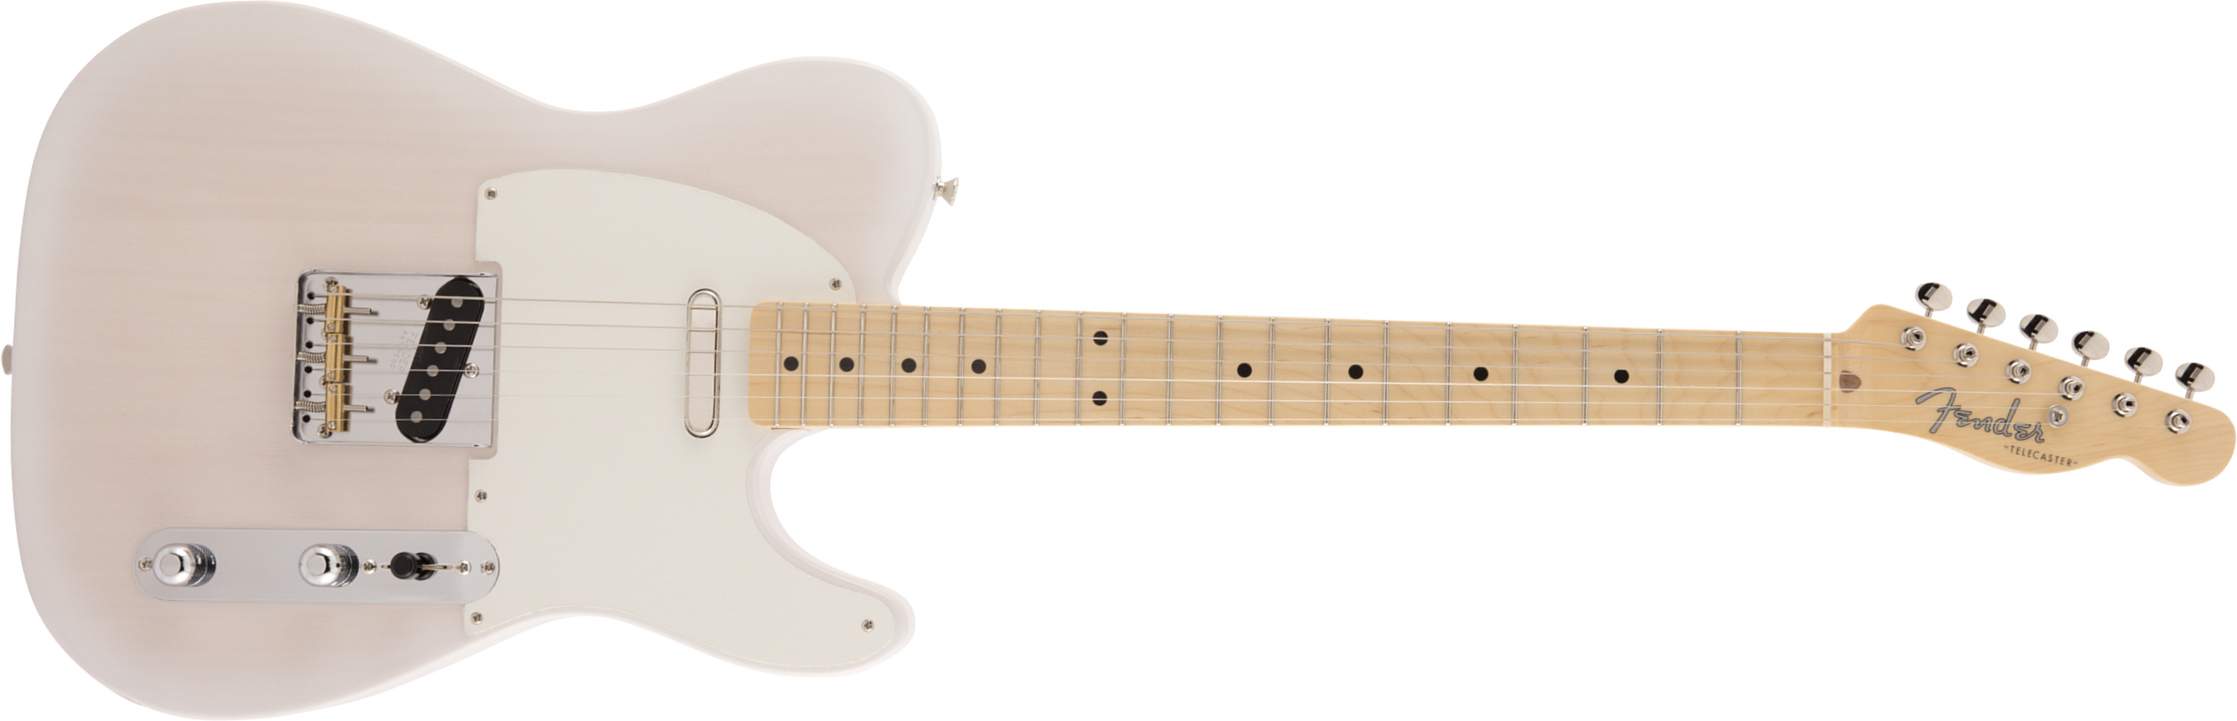 Fender Tele Traditional 50s Jap Mn - White Blonde - Televorm elektrische gitaar - Main picture